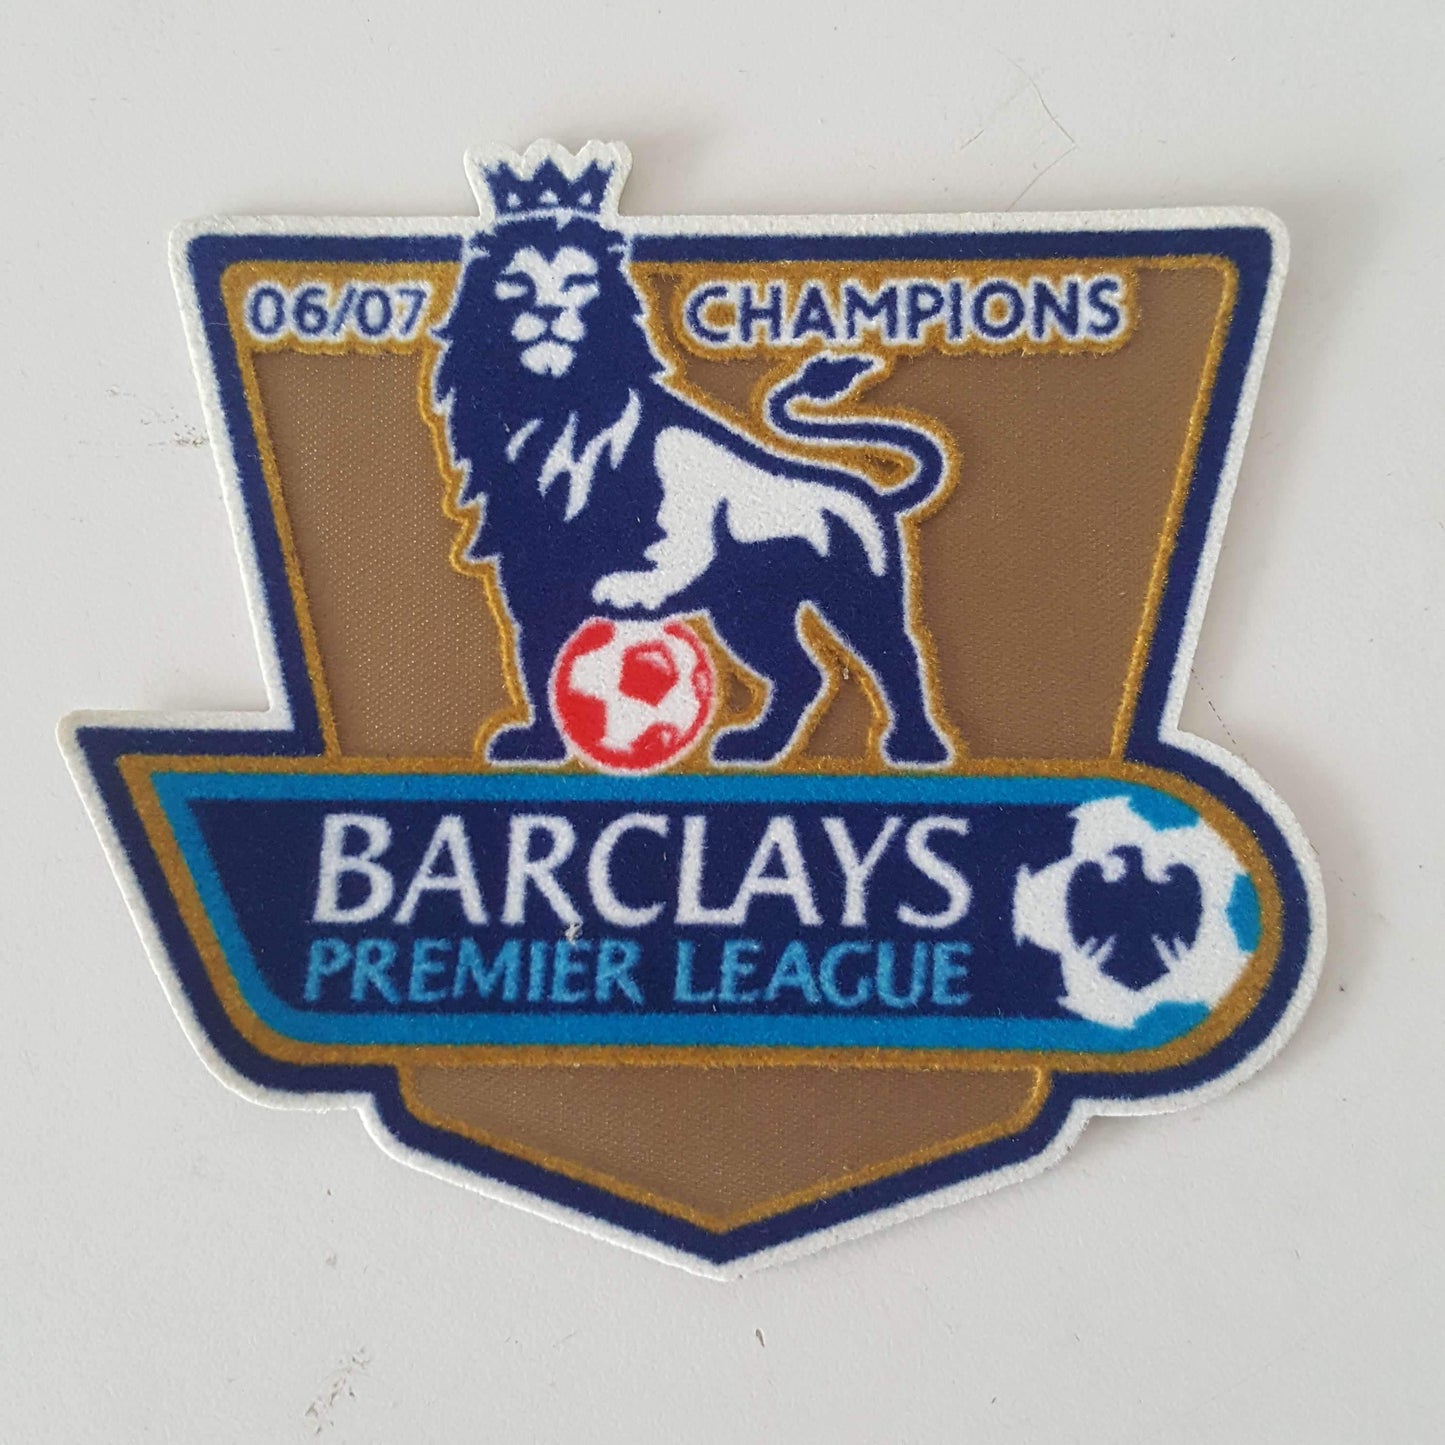 2006/07 Barclays Premier League Champions Patch - ClassicFootballJersey